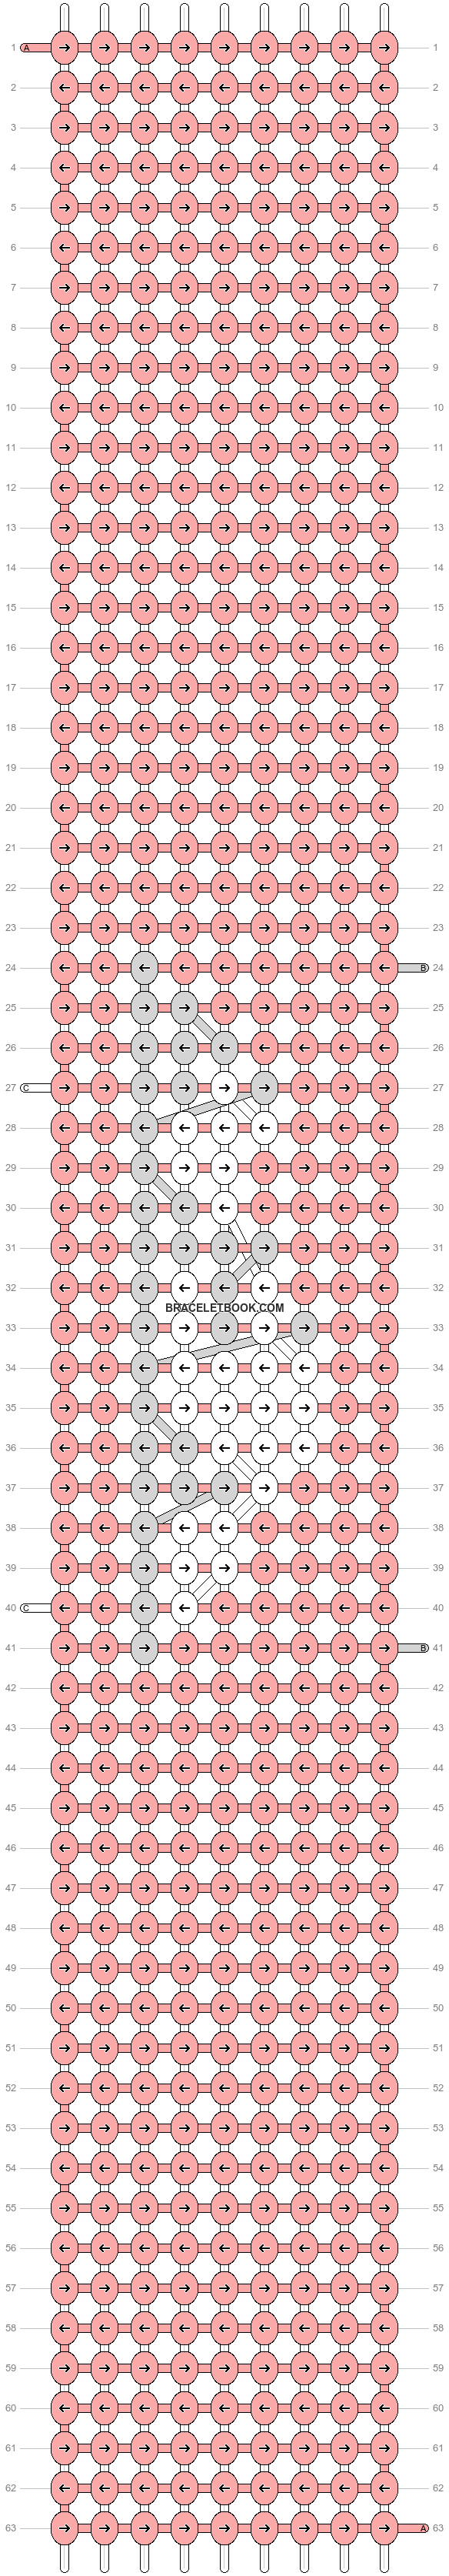 Alpha pattern #50477 variation #95229 pattern